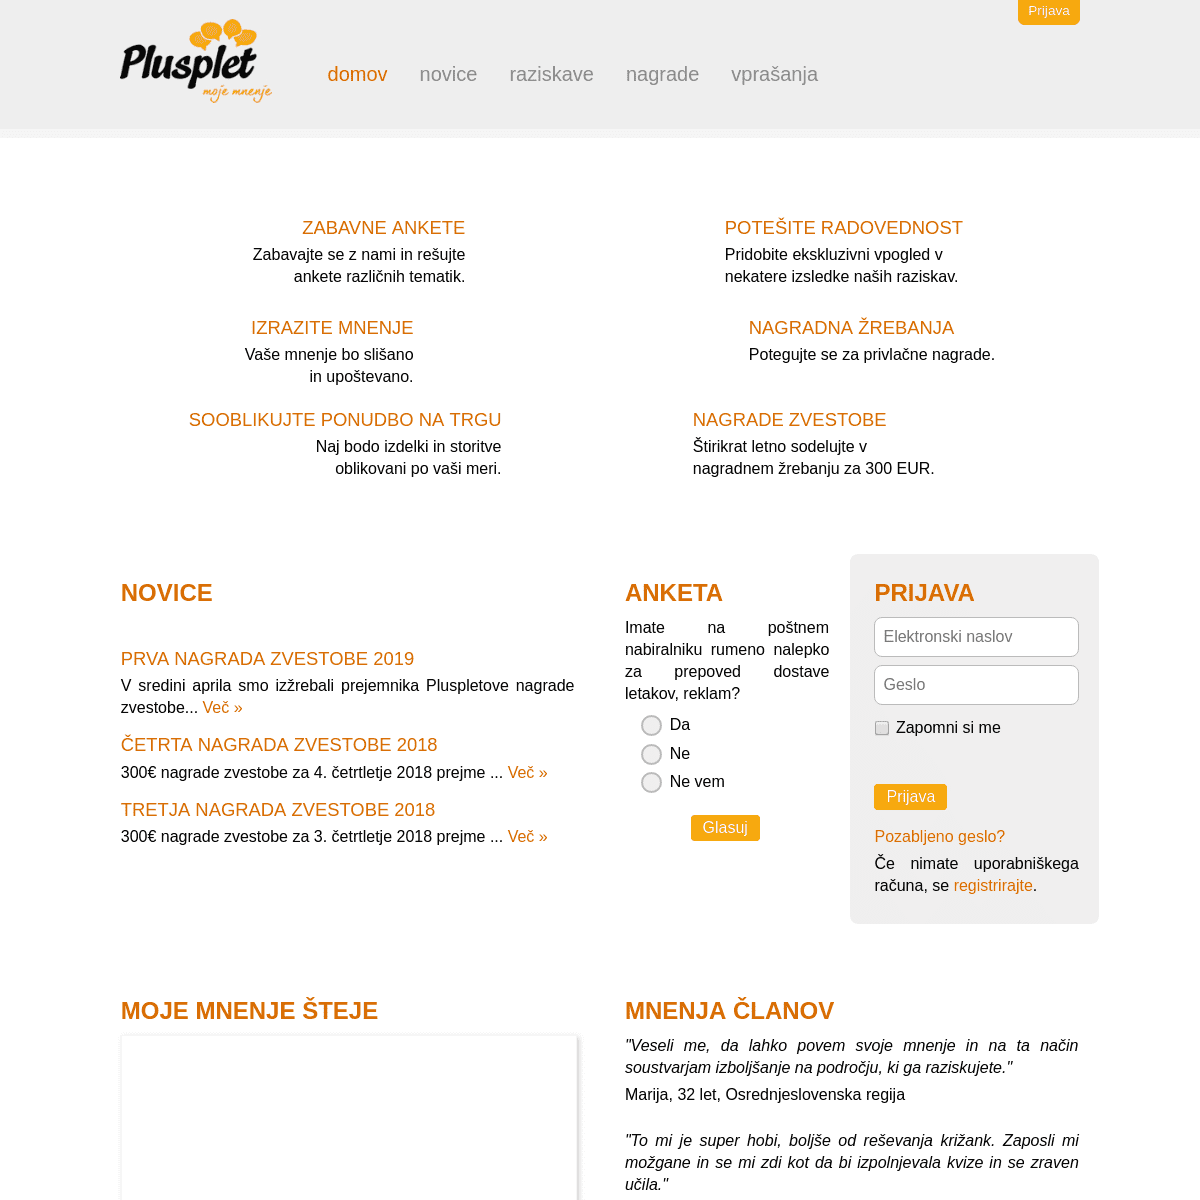 A complete backup of plusplet.com